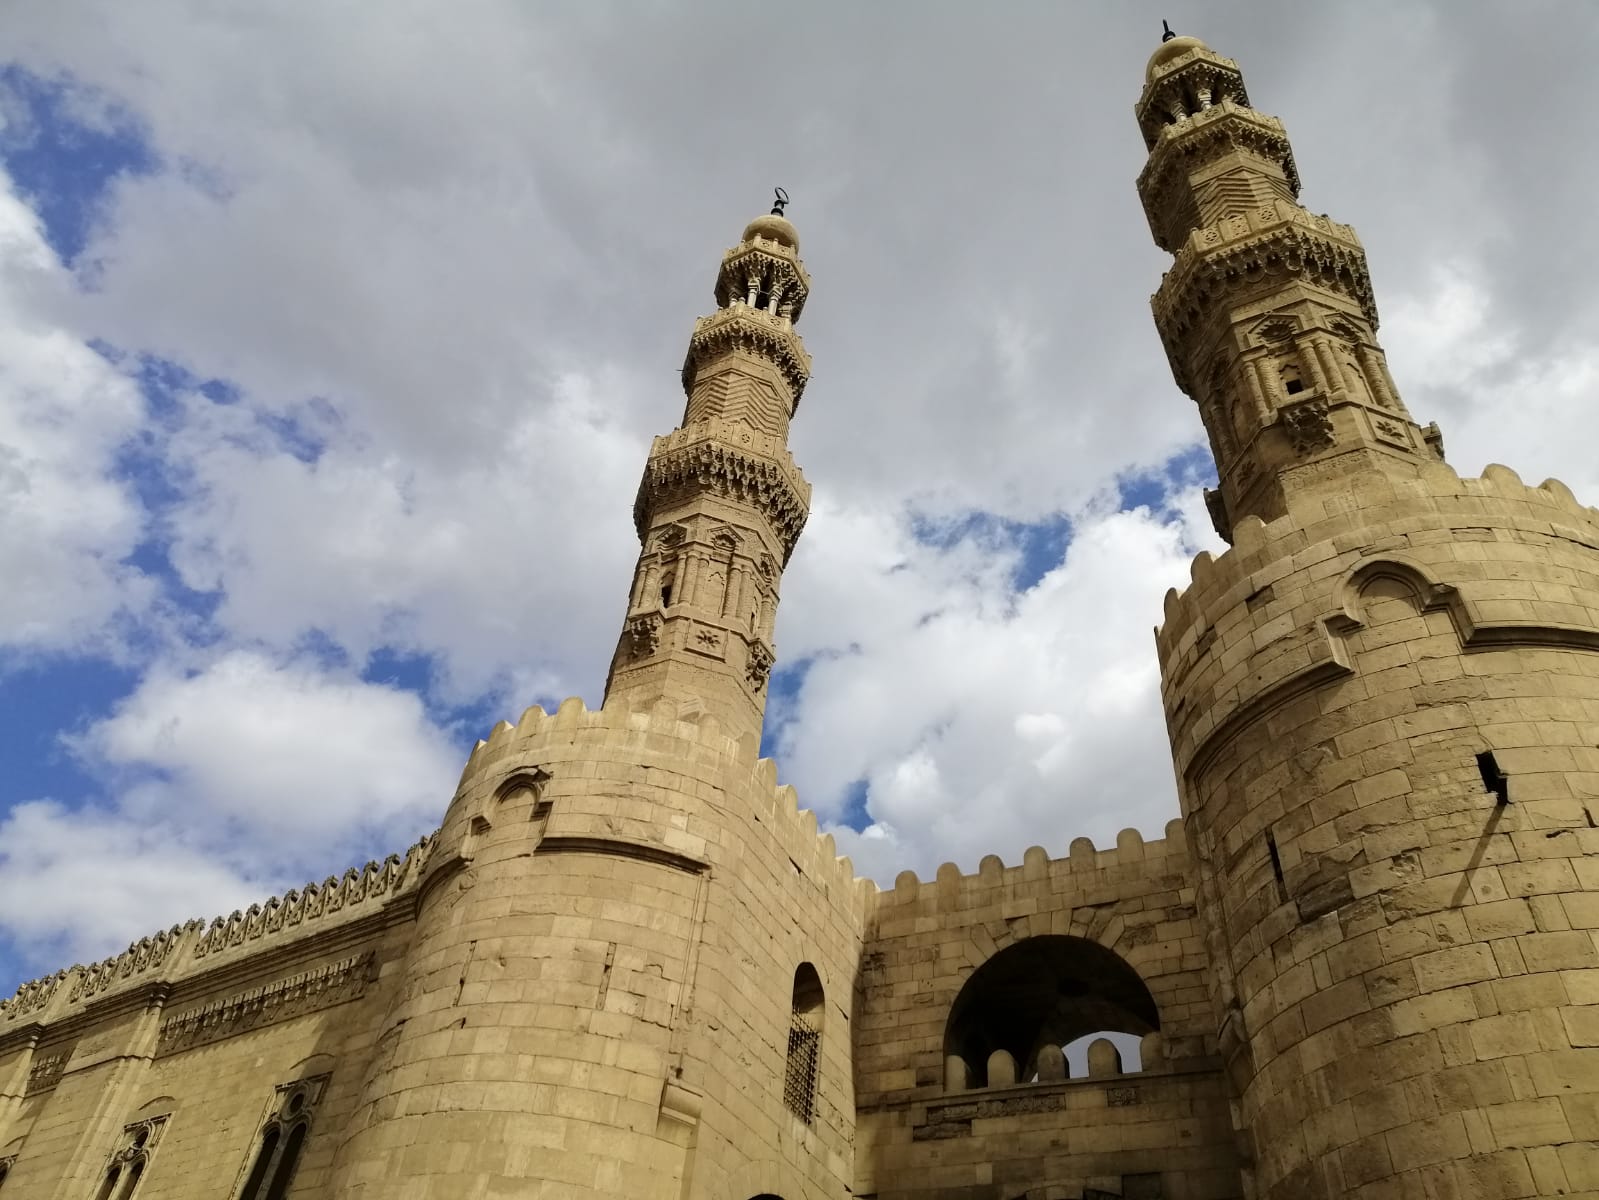 Two gigantic minarets flank the ancient gate of Bab Zuweila	